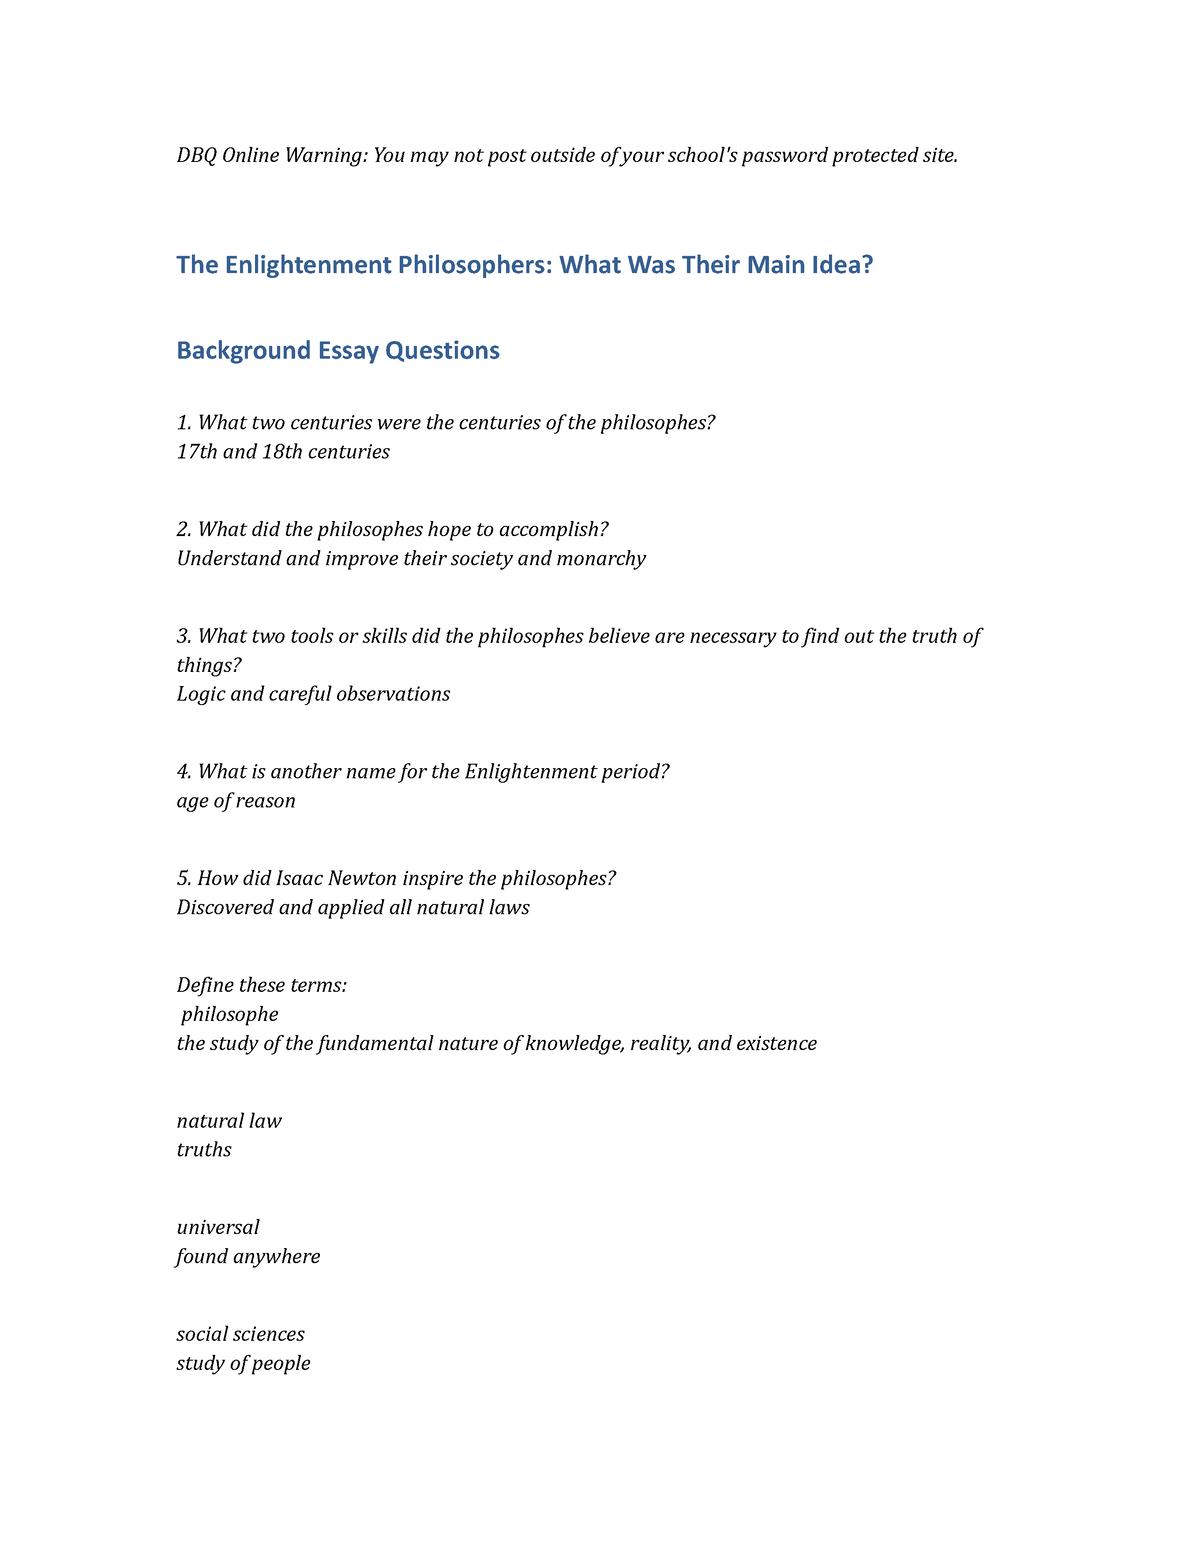 the enlightenment philosophers dbq essay